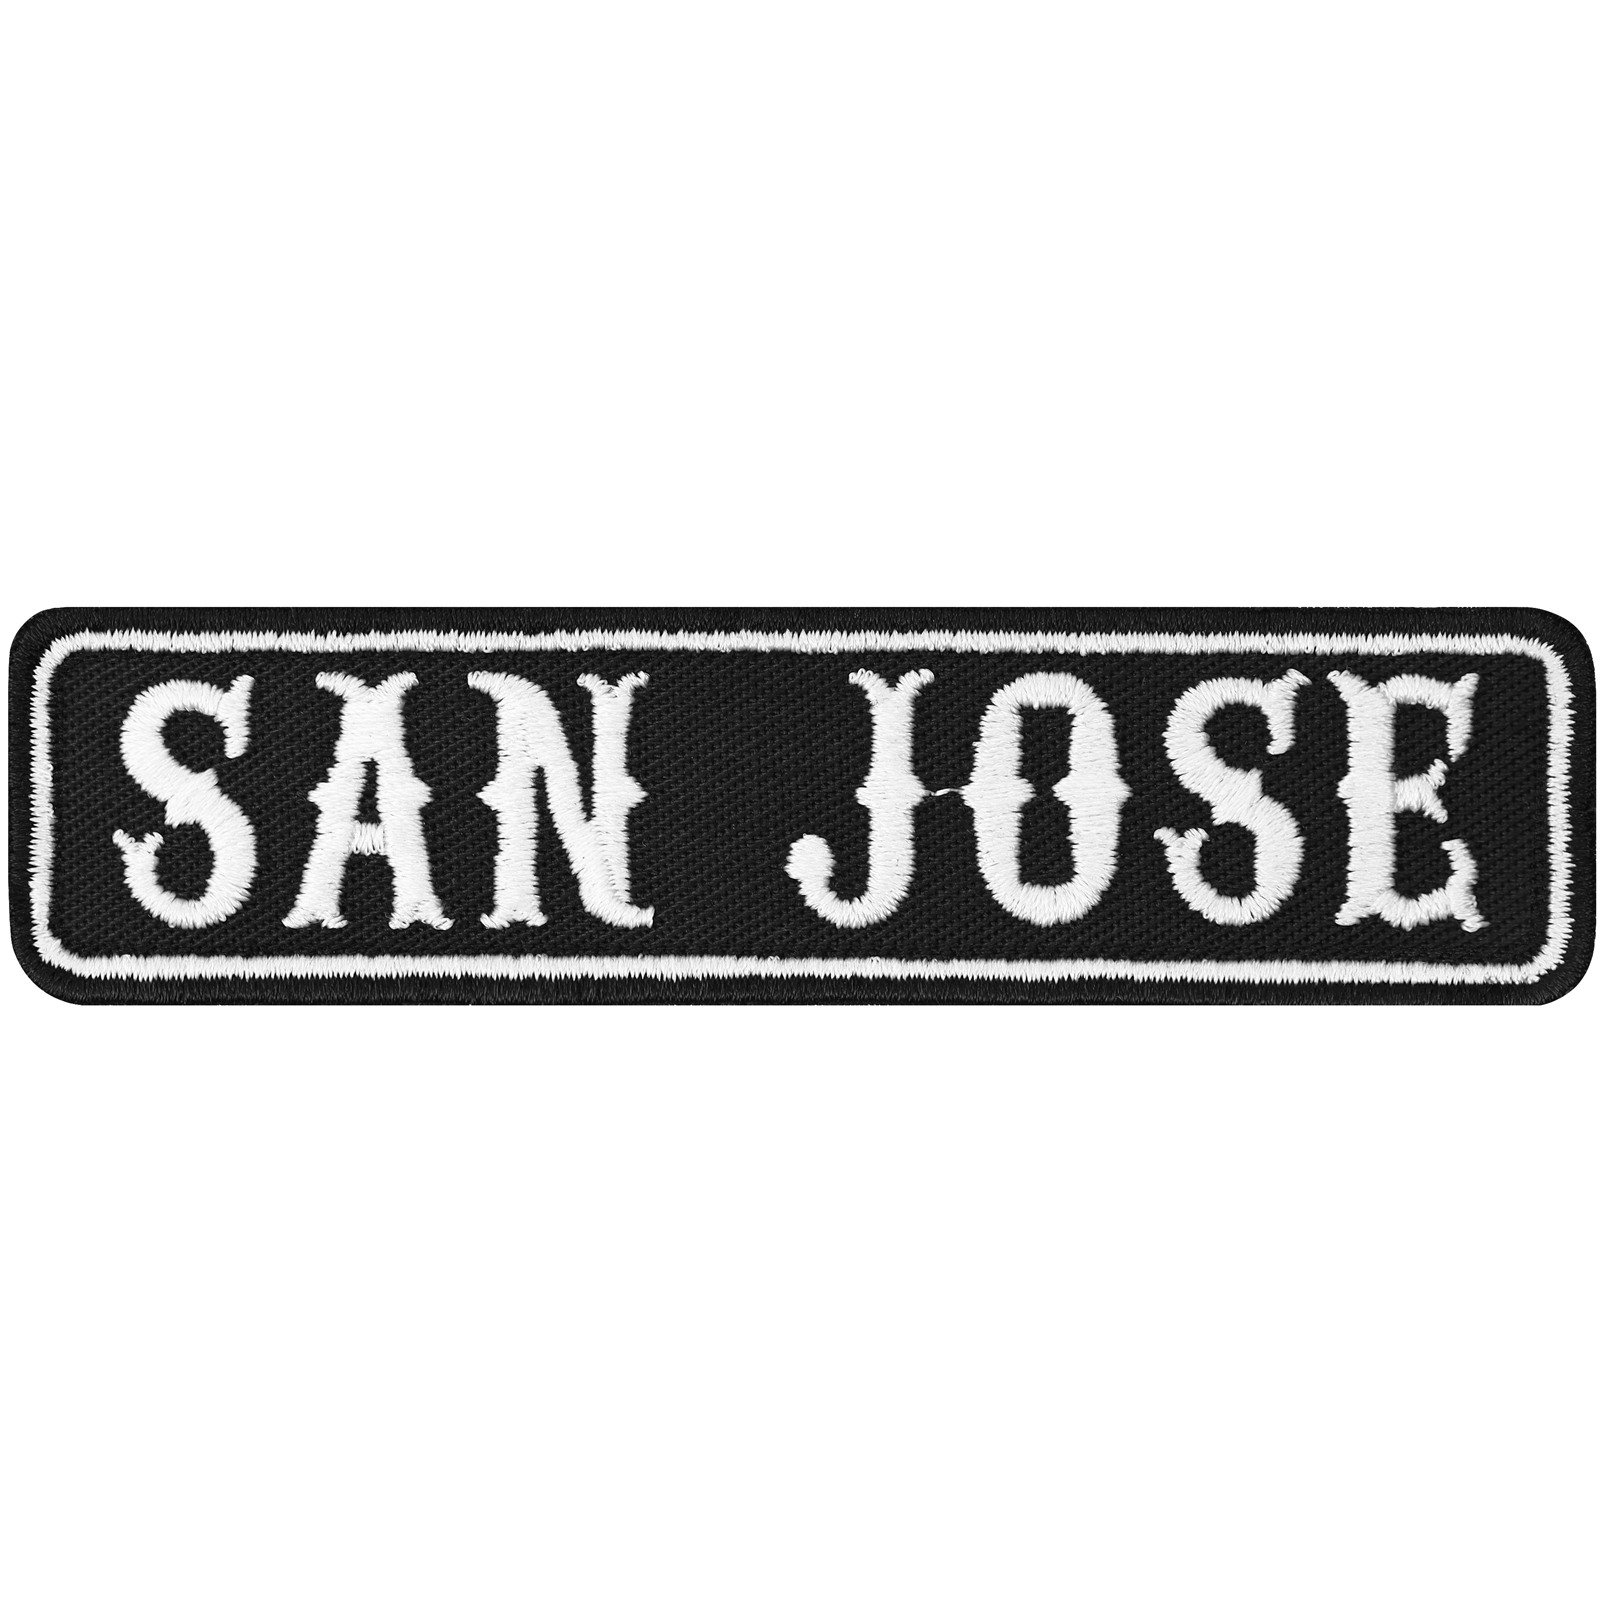 San Jose - Patch